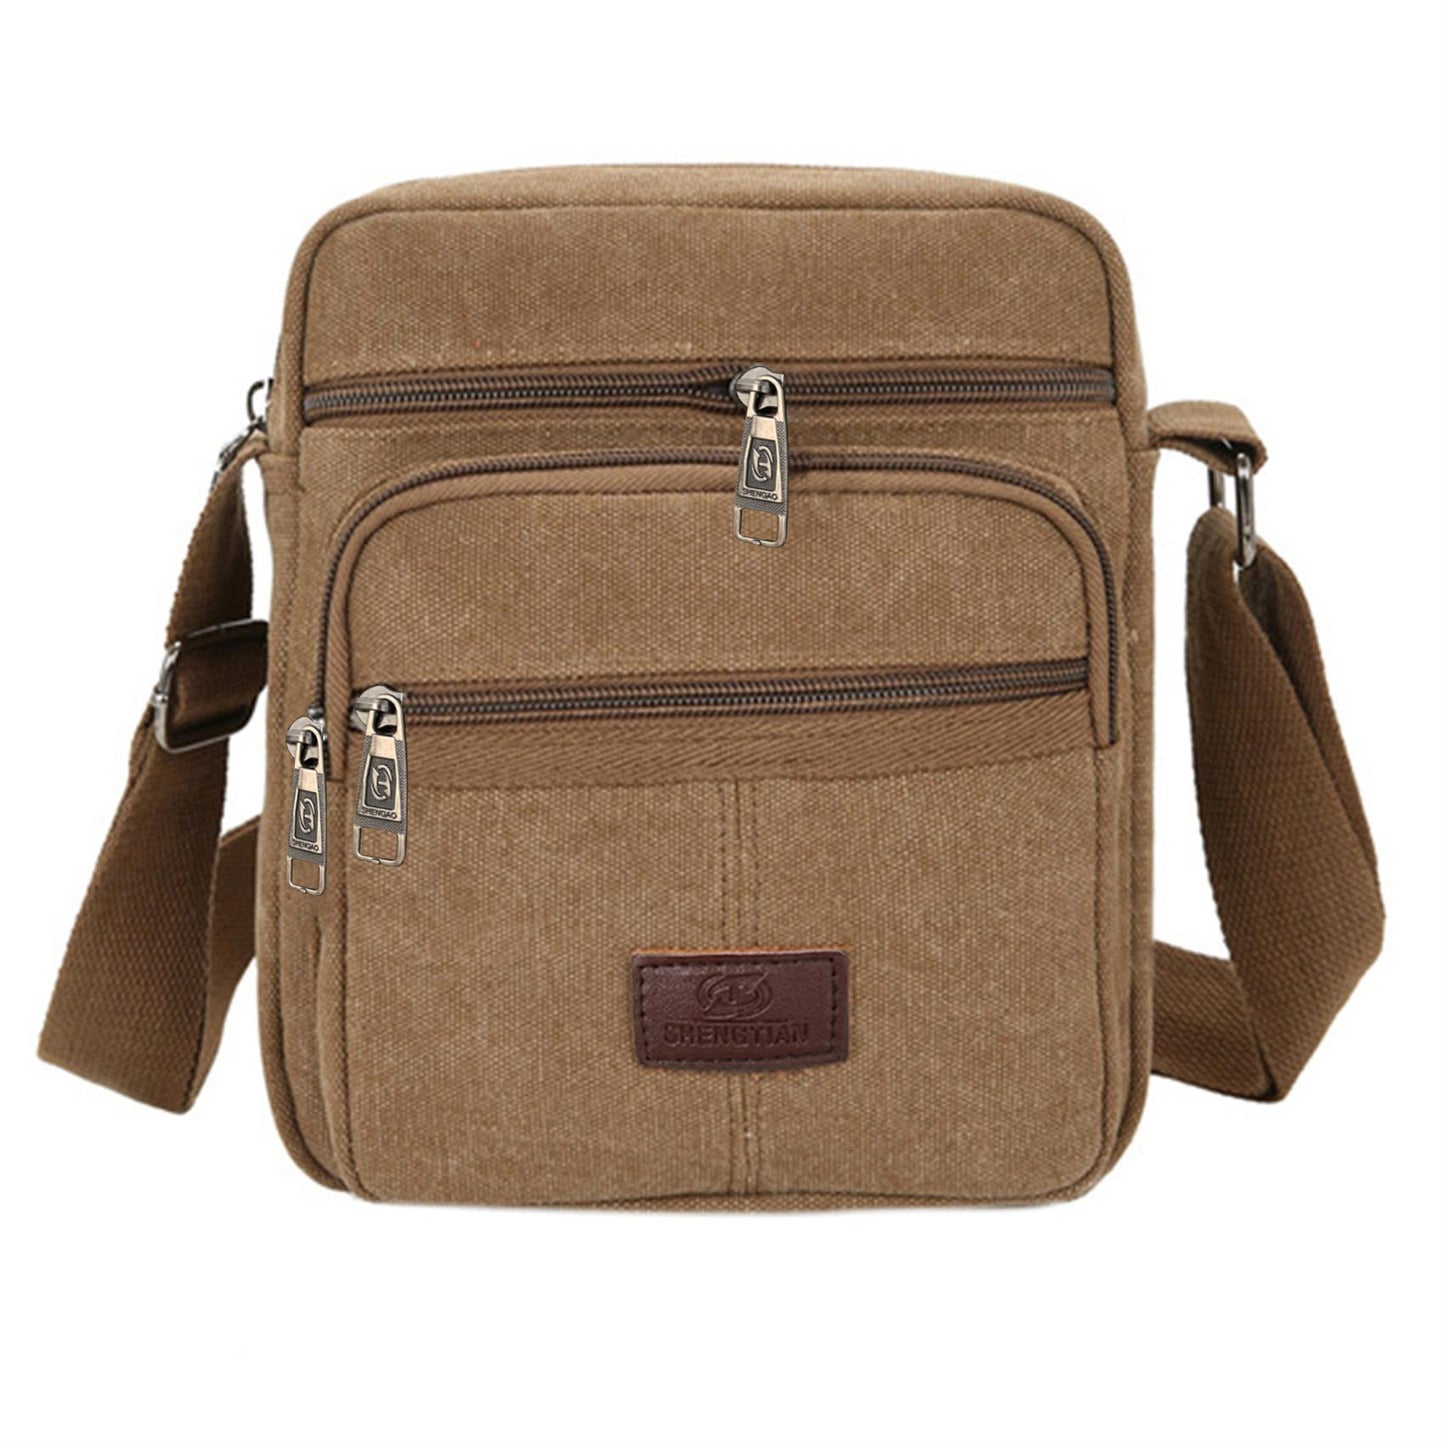 Men's Canvas Crossbody Bag - Casual Shoulder Bag for Hiking and Travel